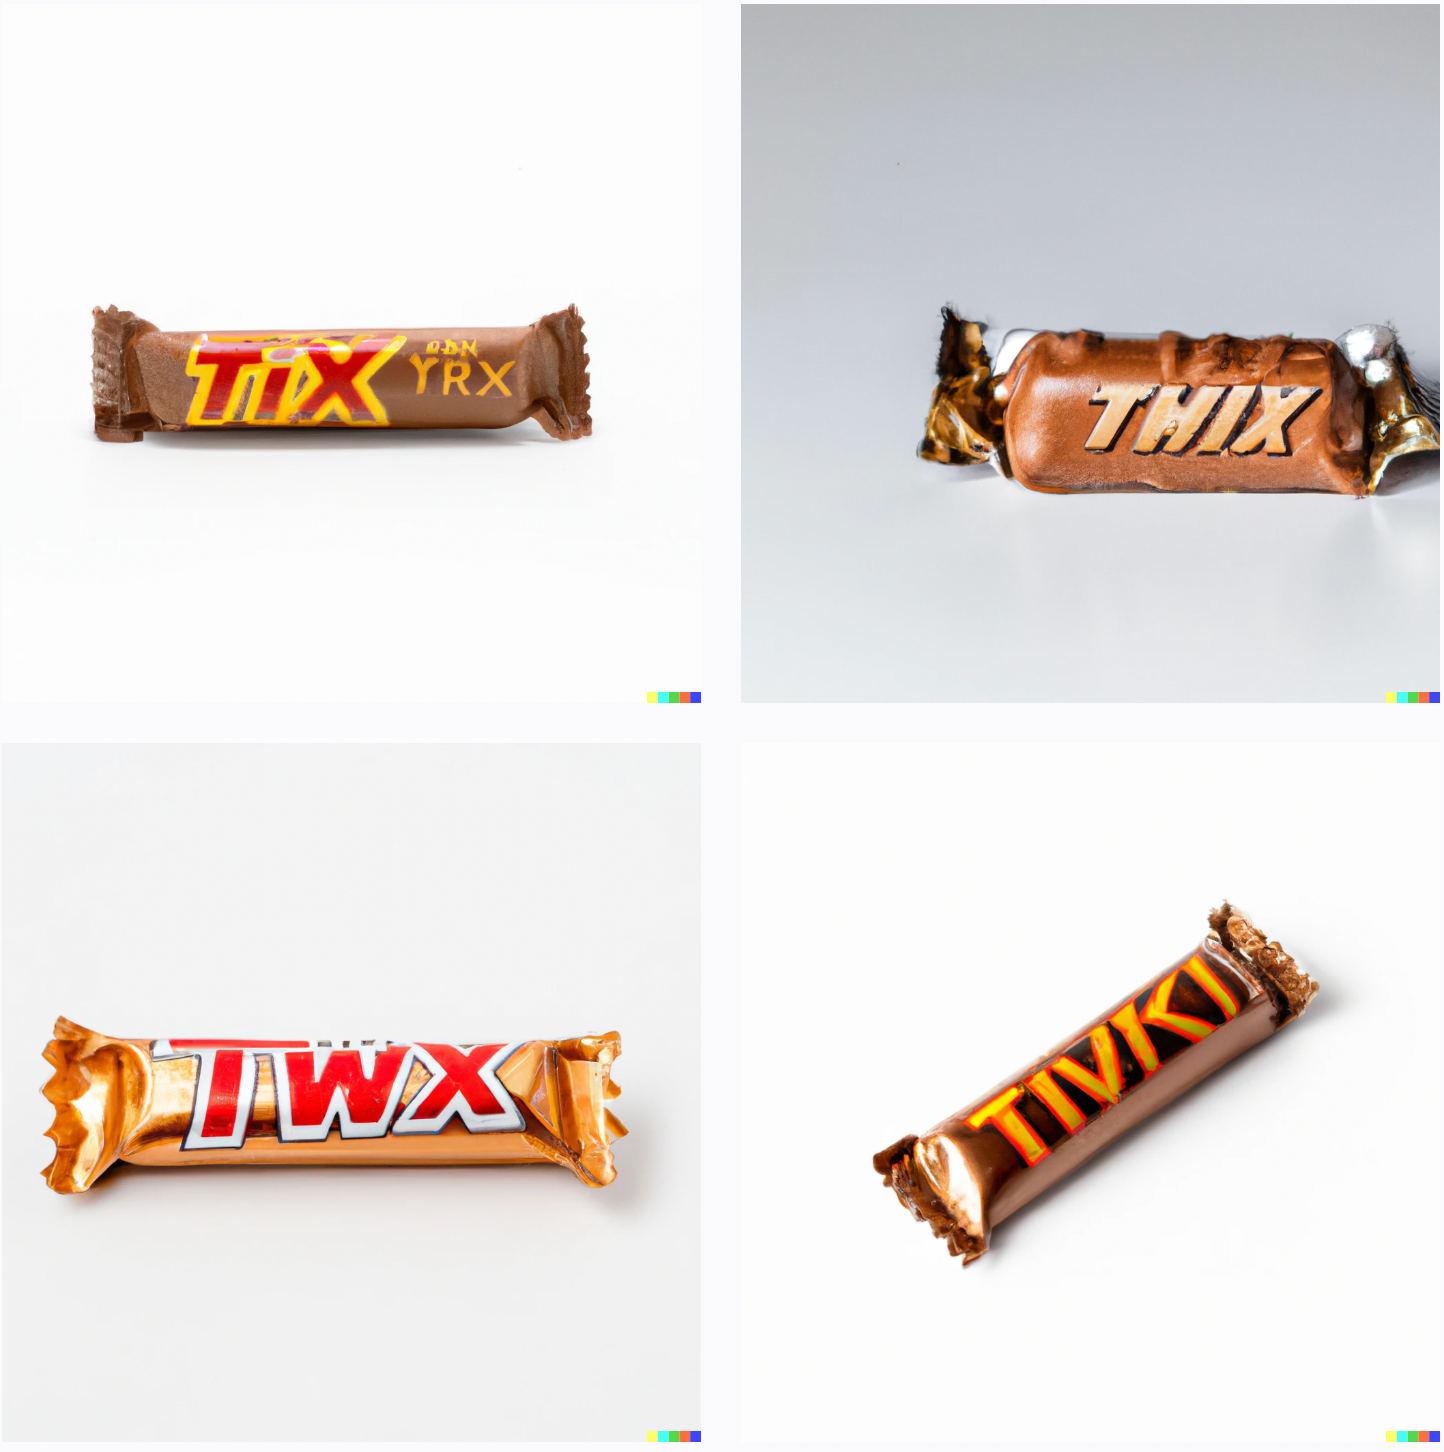 Four twix-sized candy bars labeled "Tix", "Twx", "Tivki", and "Thix"